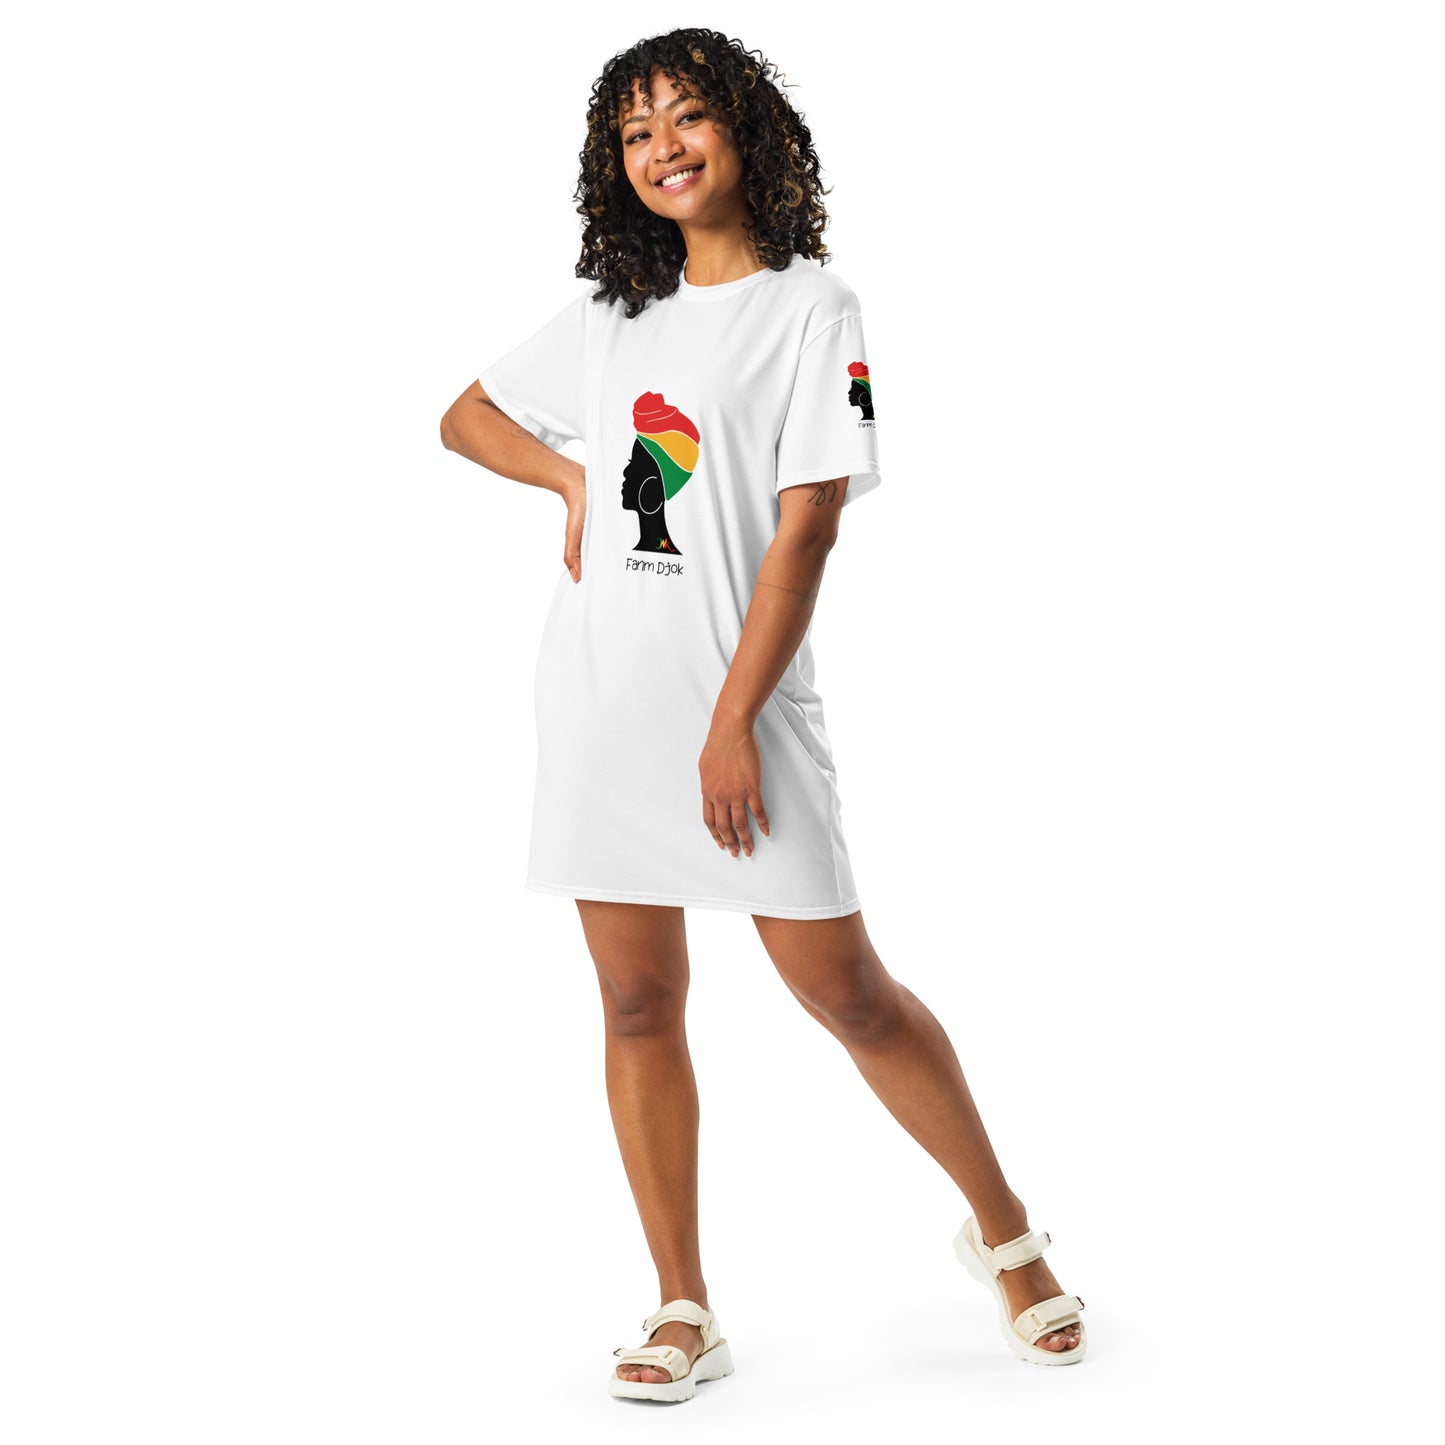 Robe T-shirt afro | Fanm Djok